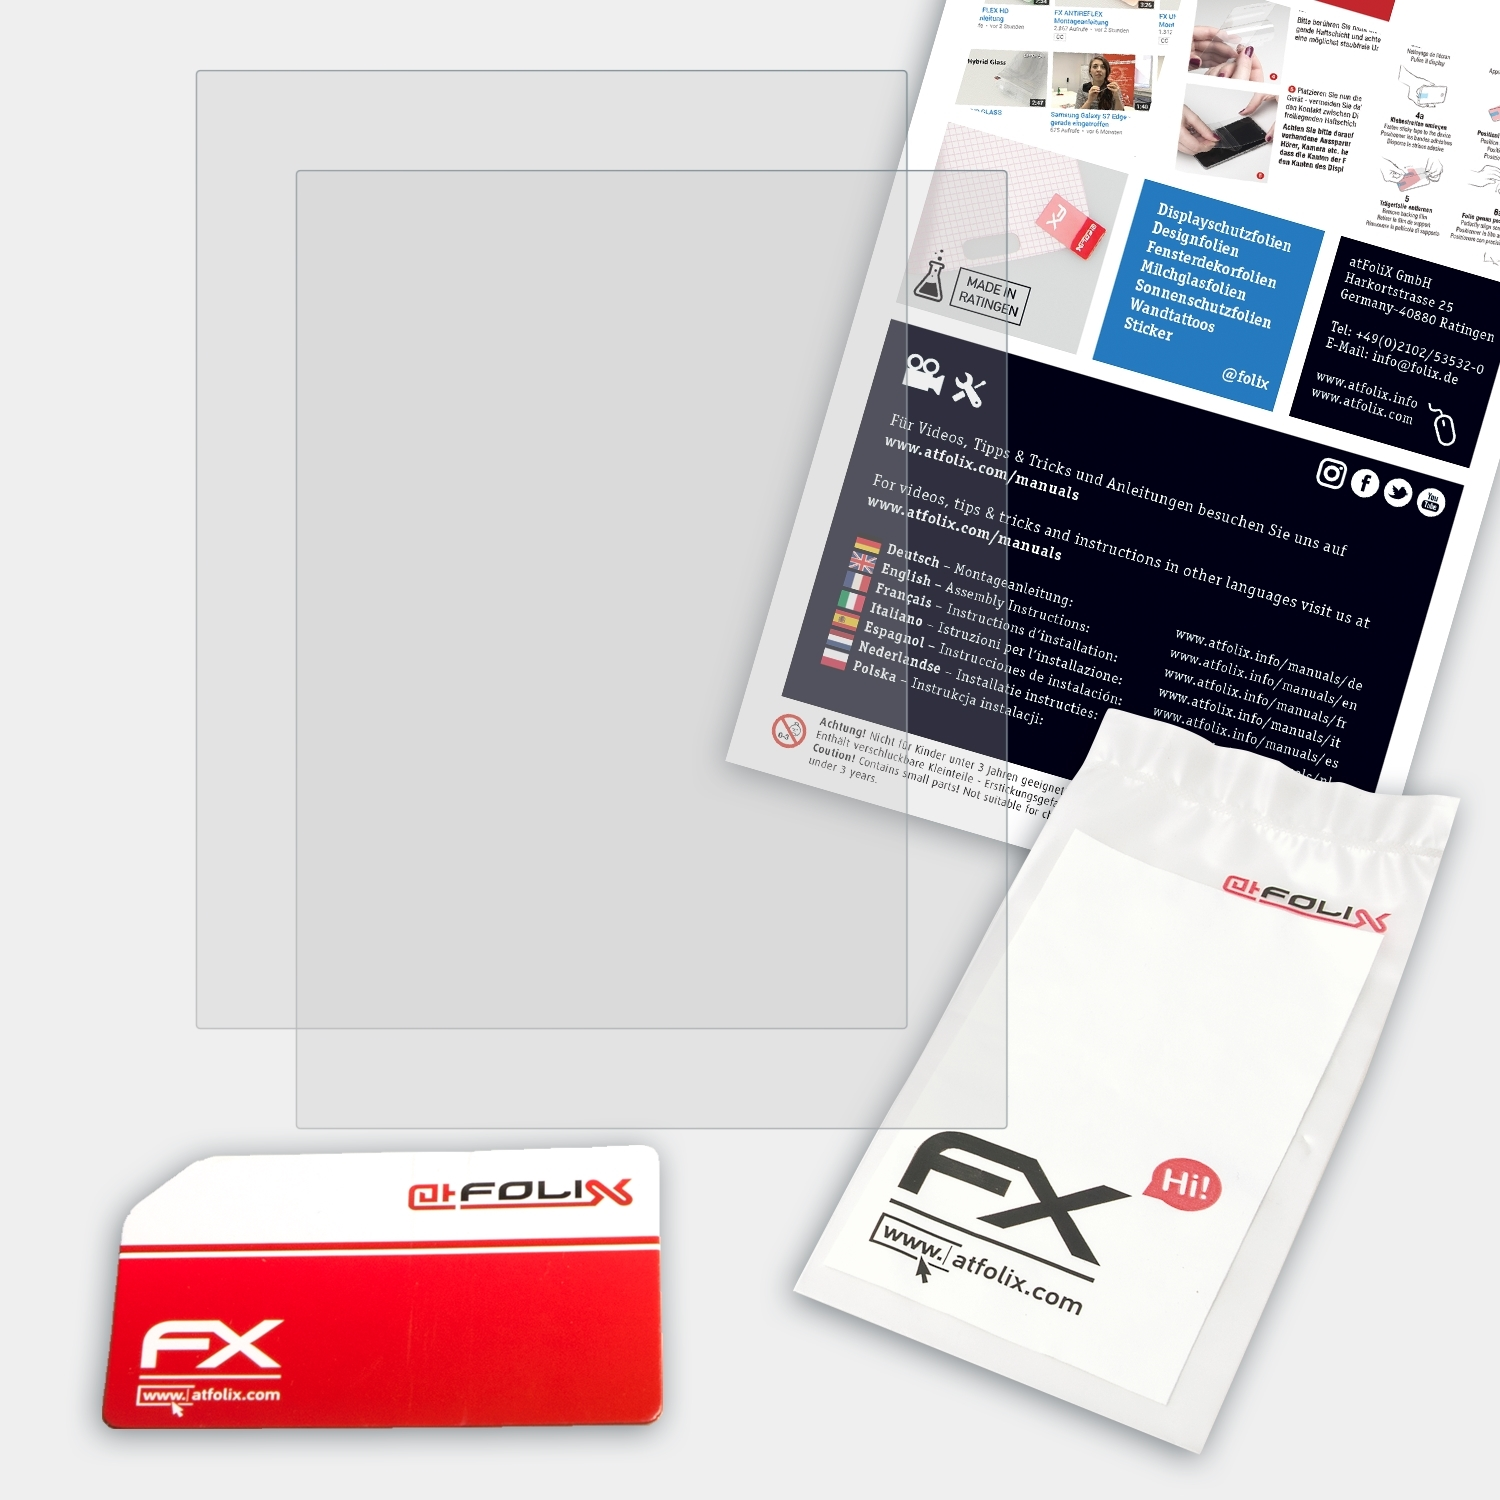 Amazon (WiFi & Paperwhite 2x ATFOLIX FX-Antireflex 3G)) Kindle Displayschutz(für